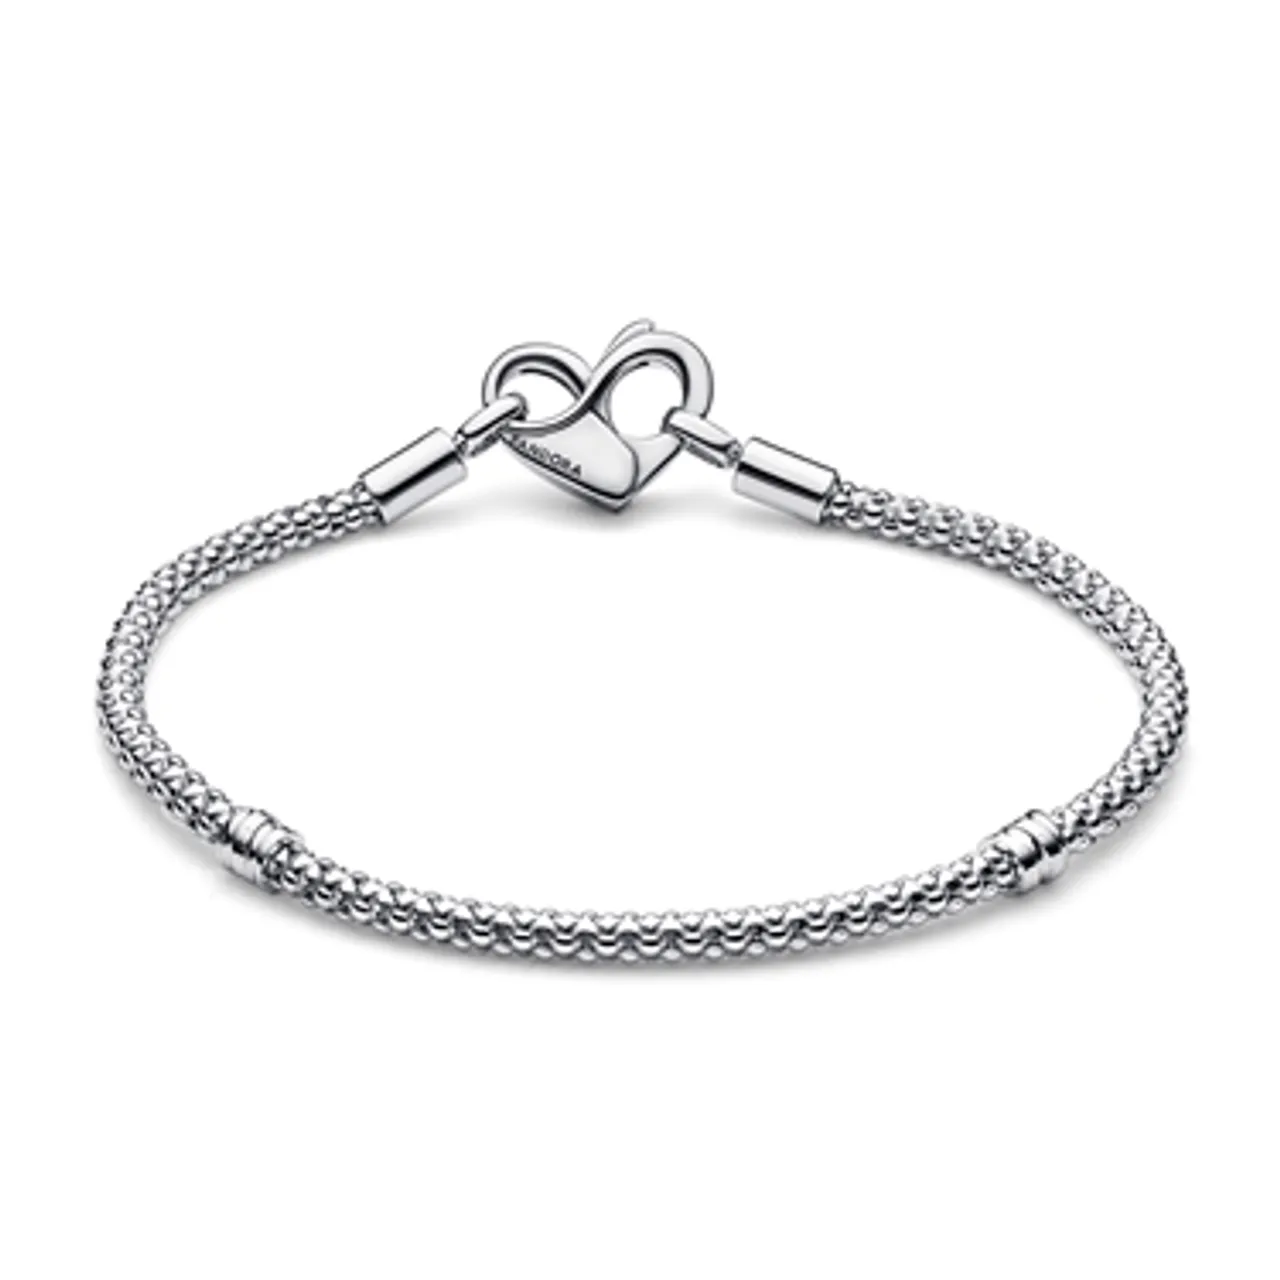 Pandora Moments Studded Chain Bracelet - 17cm